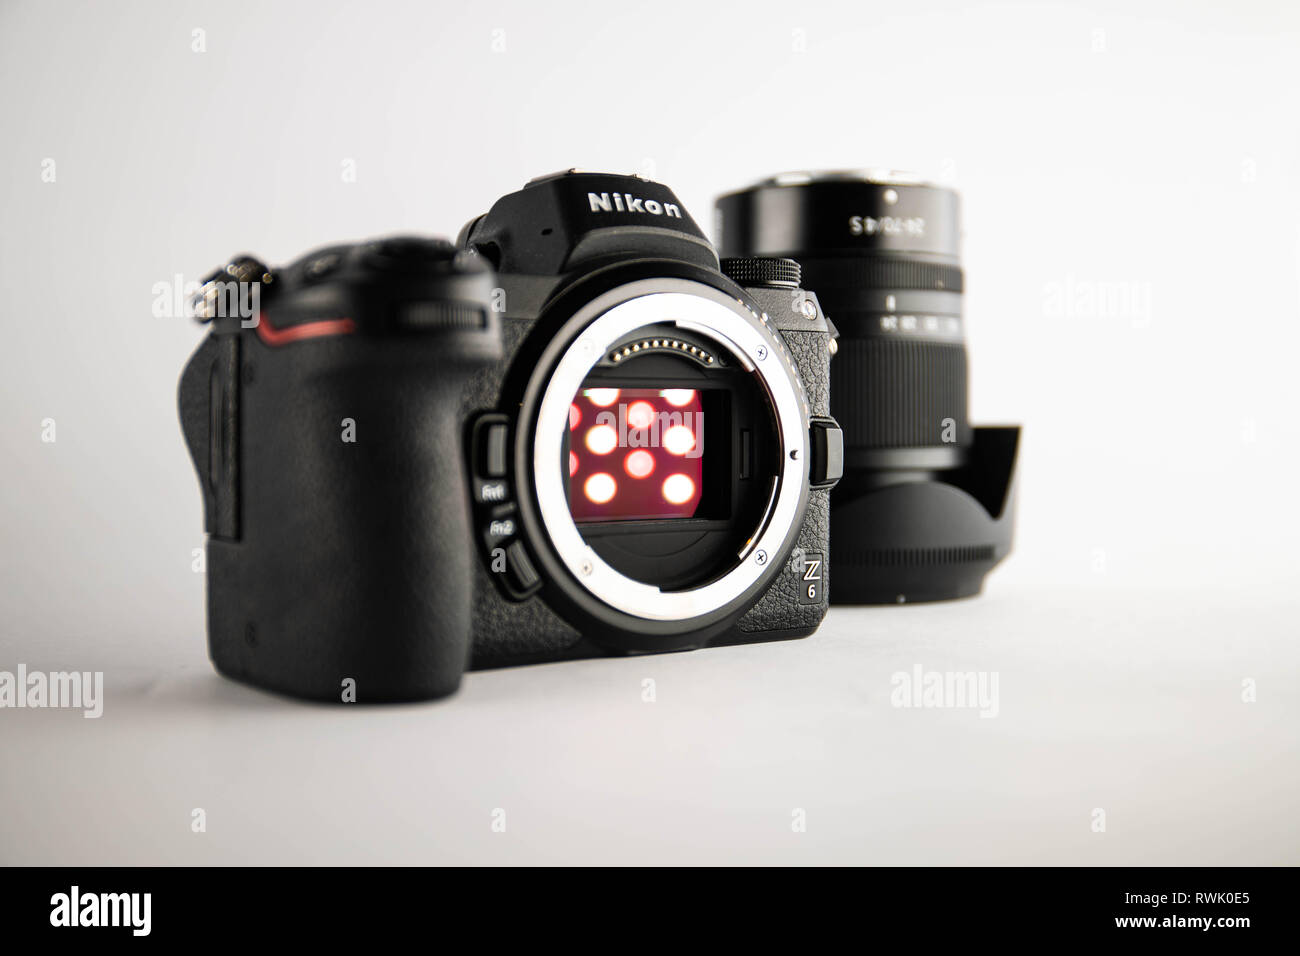 Nikon mirrorless camera hi-res stock photography and images - Alamy